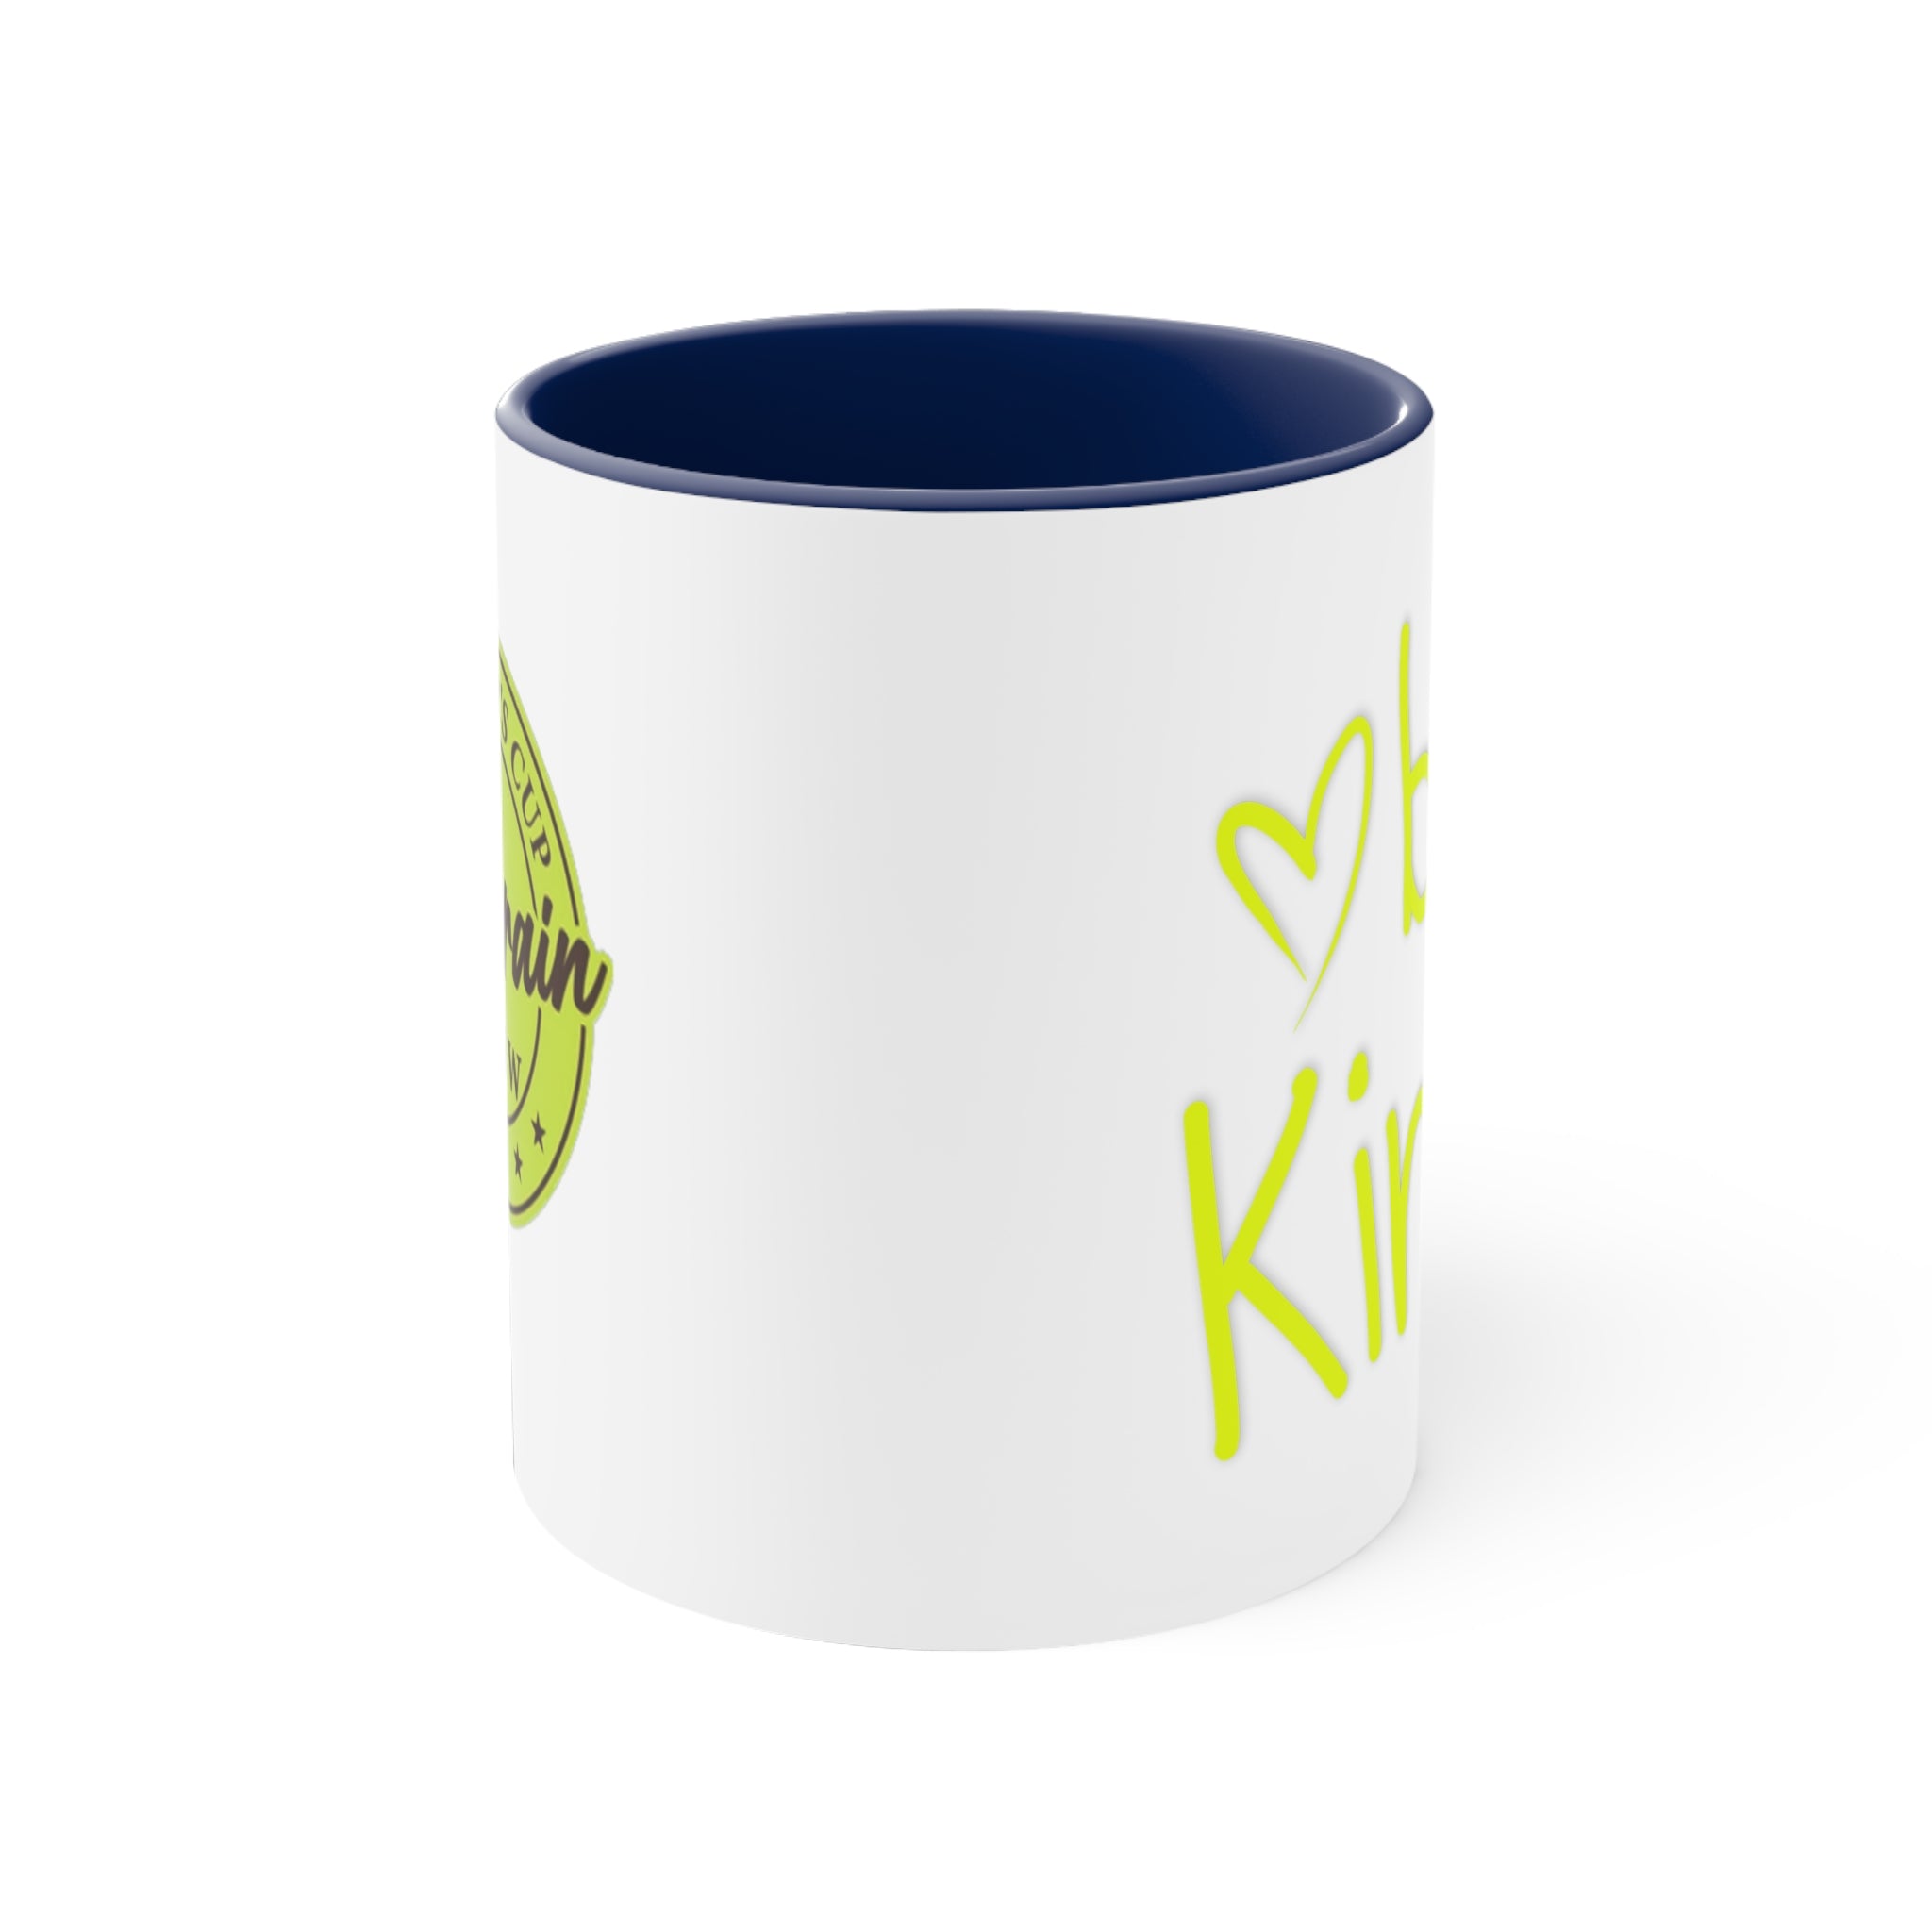 Be Kind Accent Coffee Mug, 11oz